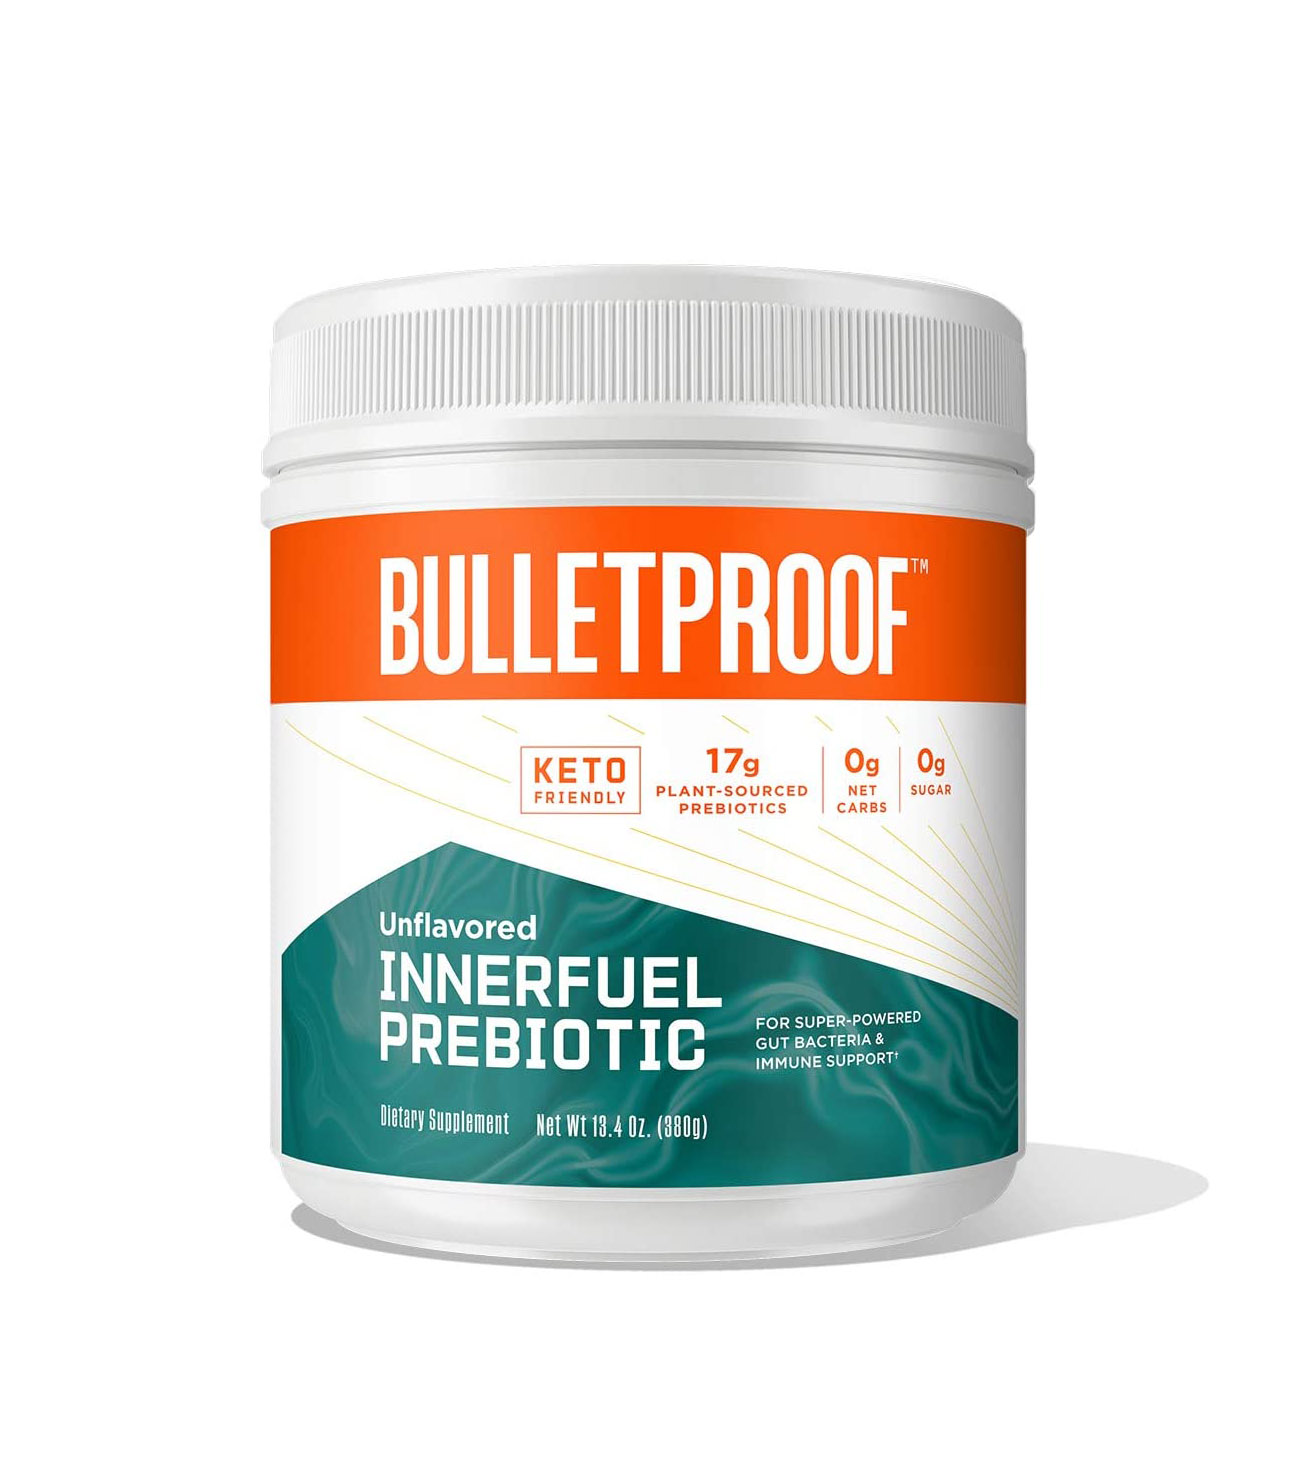 Bulletproof + Unflavored Innerfuel Prebiotic Fiber Powder